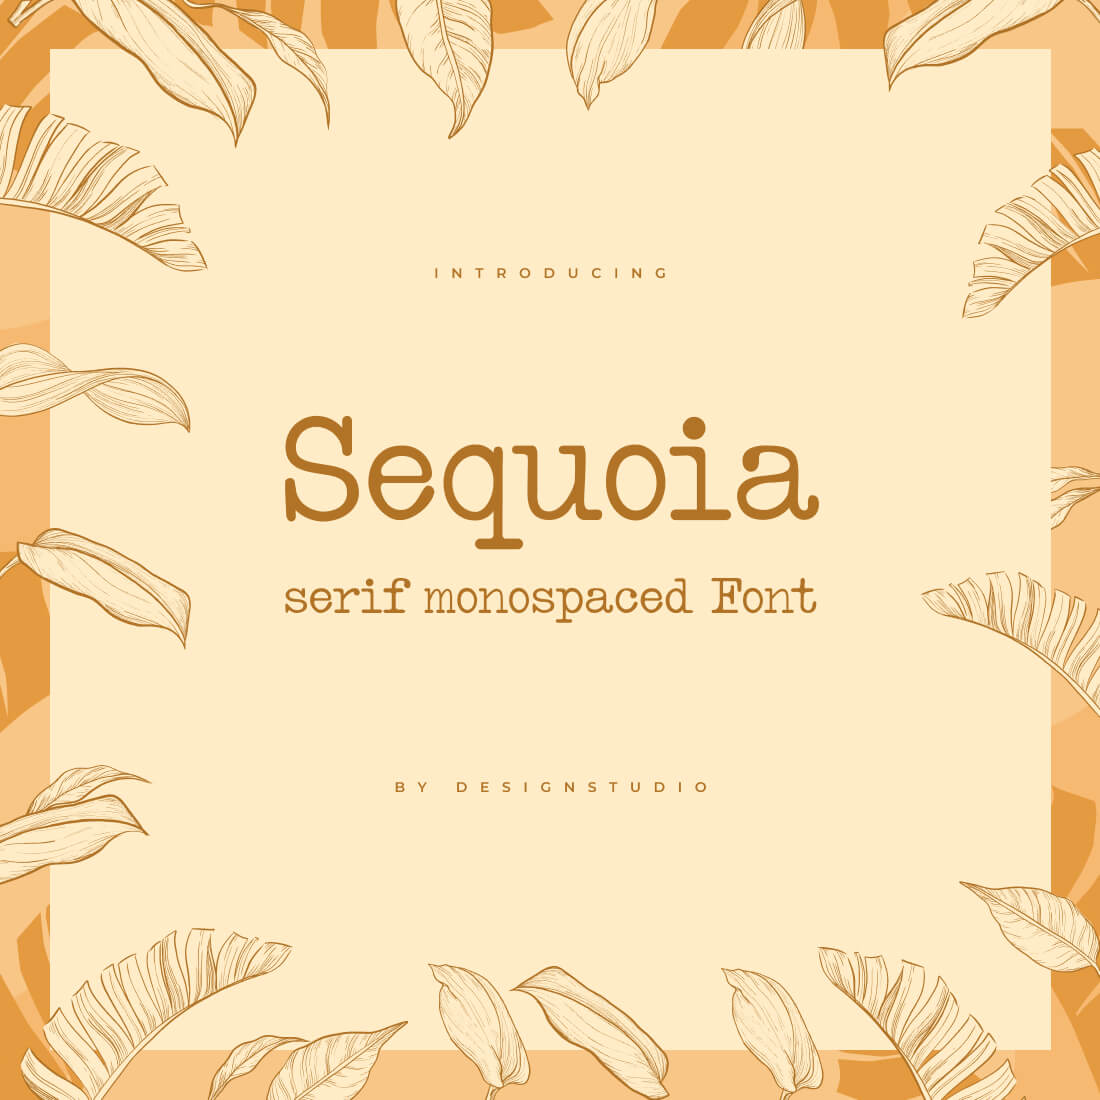 Sequoia Serif Monospaced Font cover image.